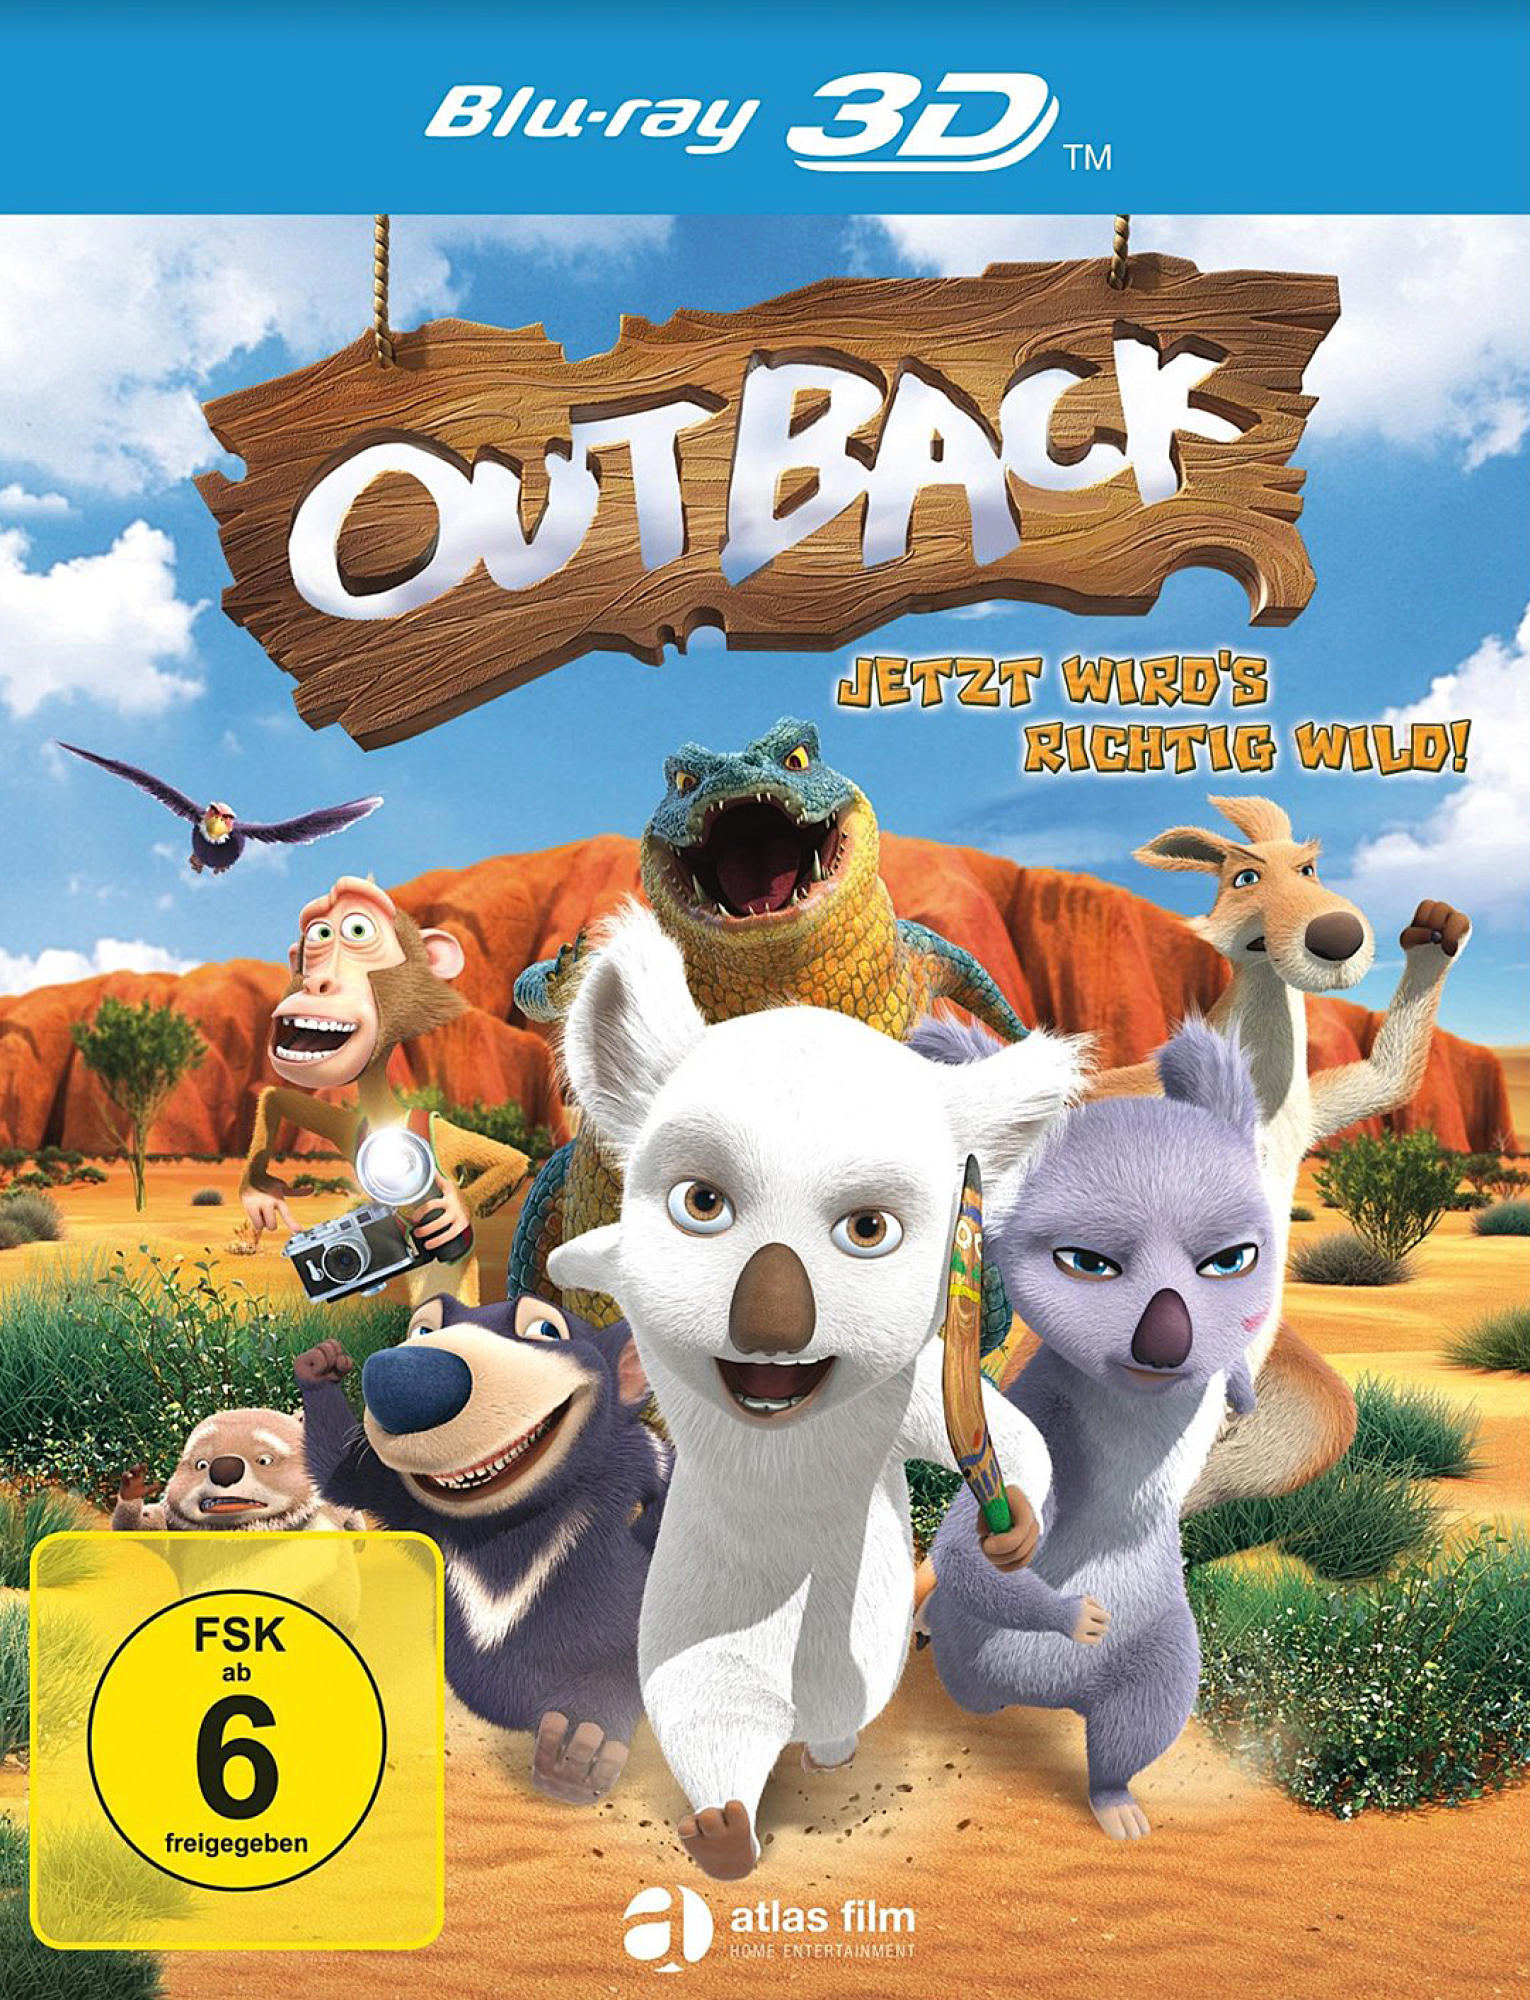 3D wild! Outback richtig Blu-ray - Jetzt wird\'s